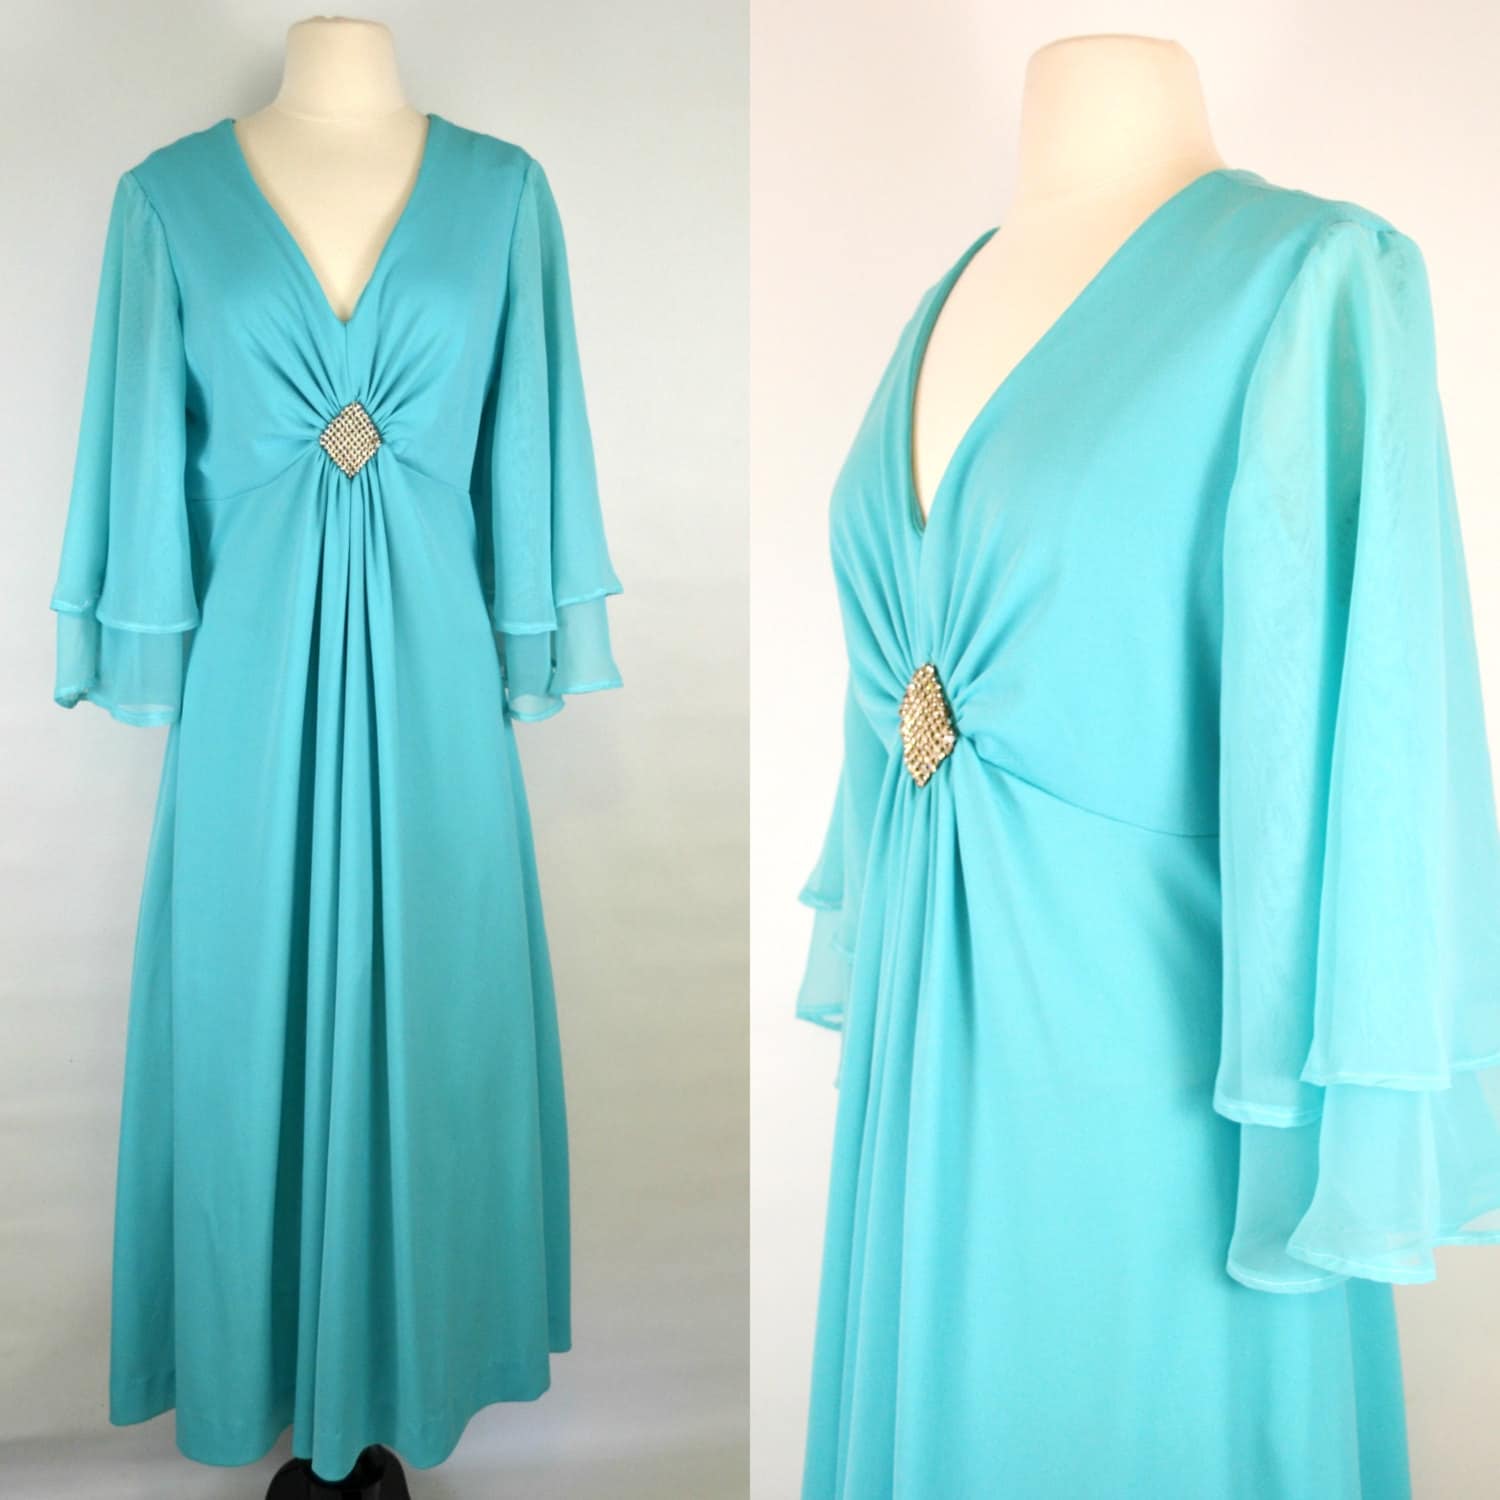 1970s Aqua Blue Empire Waist Maxi Dress with Rhinestones